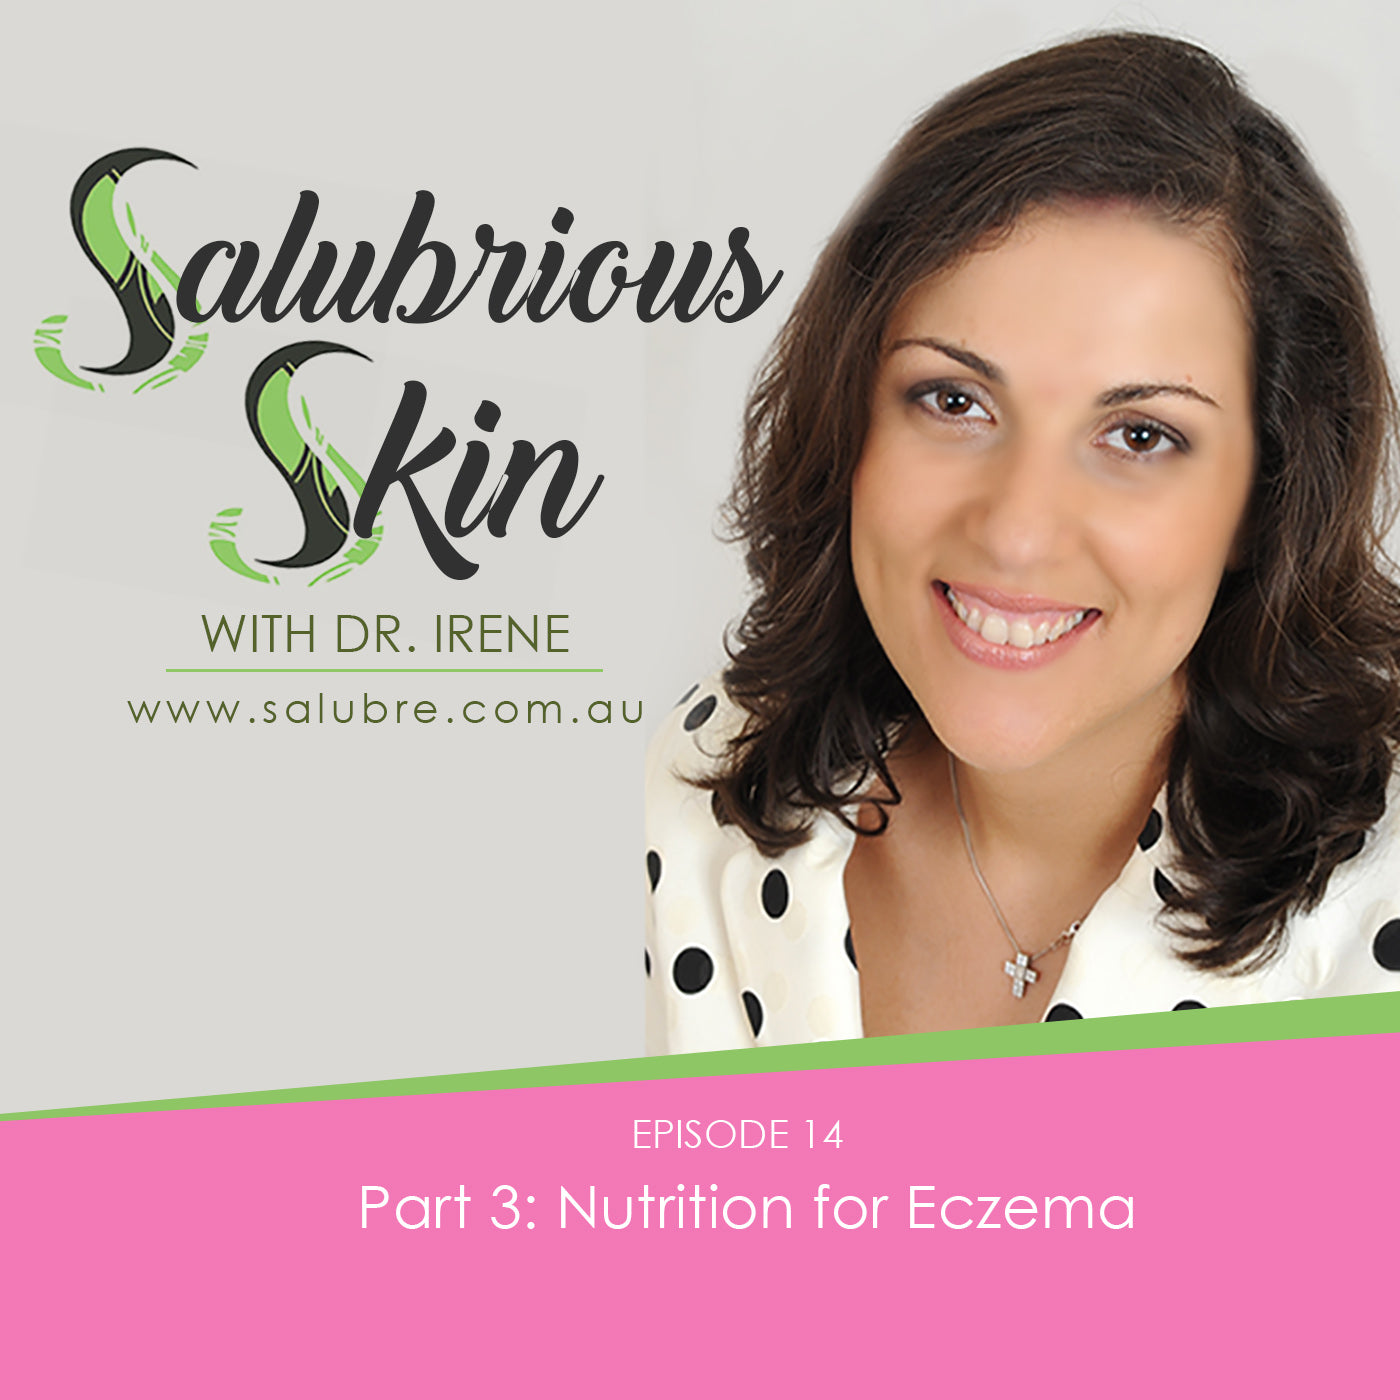 Episode 14: Part 3: Nutrition for Eczema